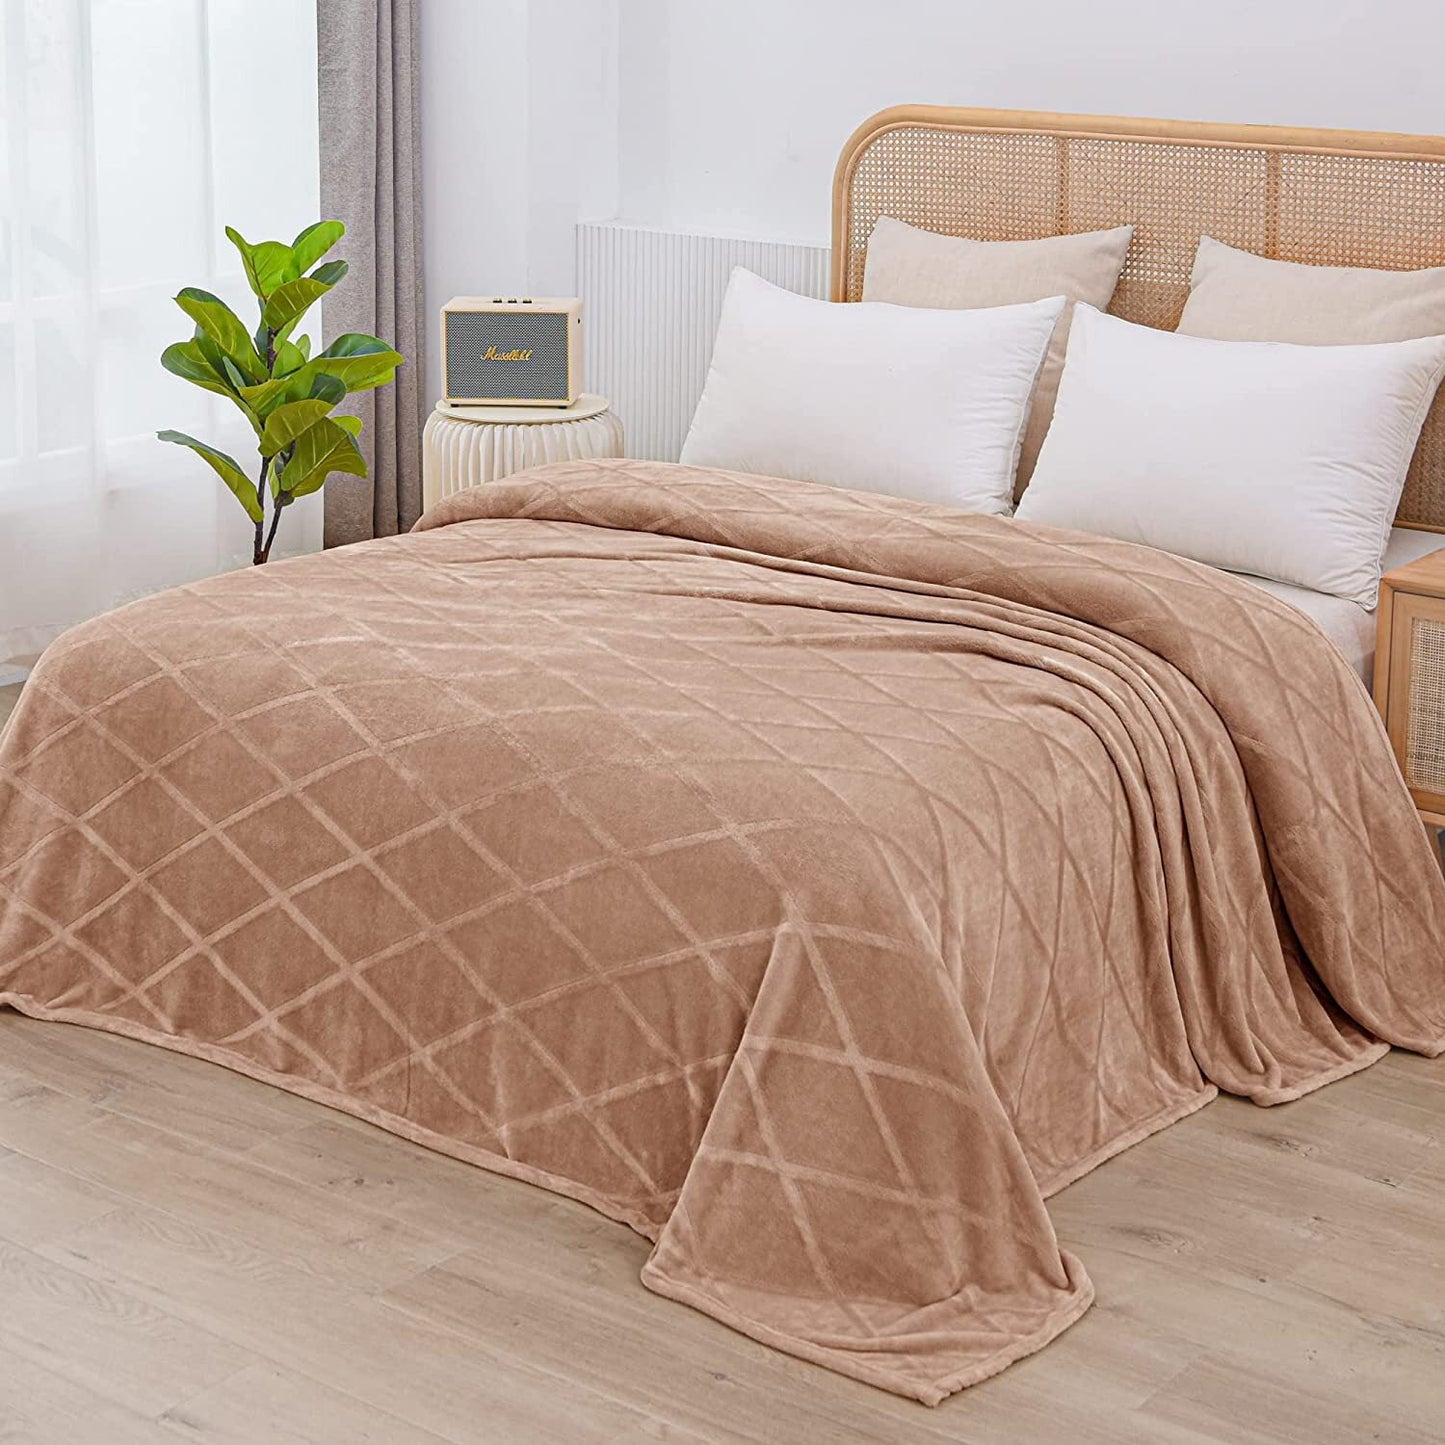 Exclusivo Mezcla Queen Size Flannel Fleece Blanket, 90x90 Inches Soft Diamond Geometry Pattern Velvet Plush Blanket for Bed, Cozy, Warm, Lightweight and Decorative Camel Blanket